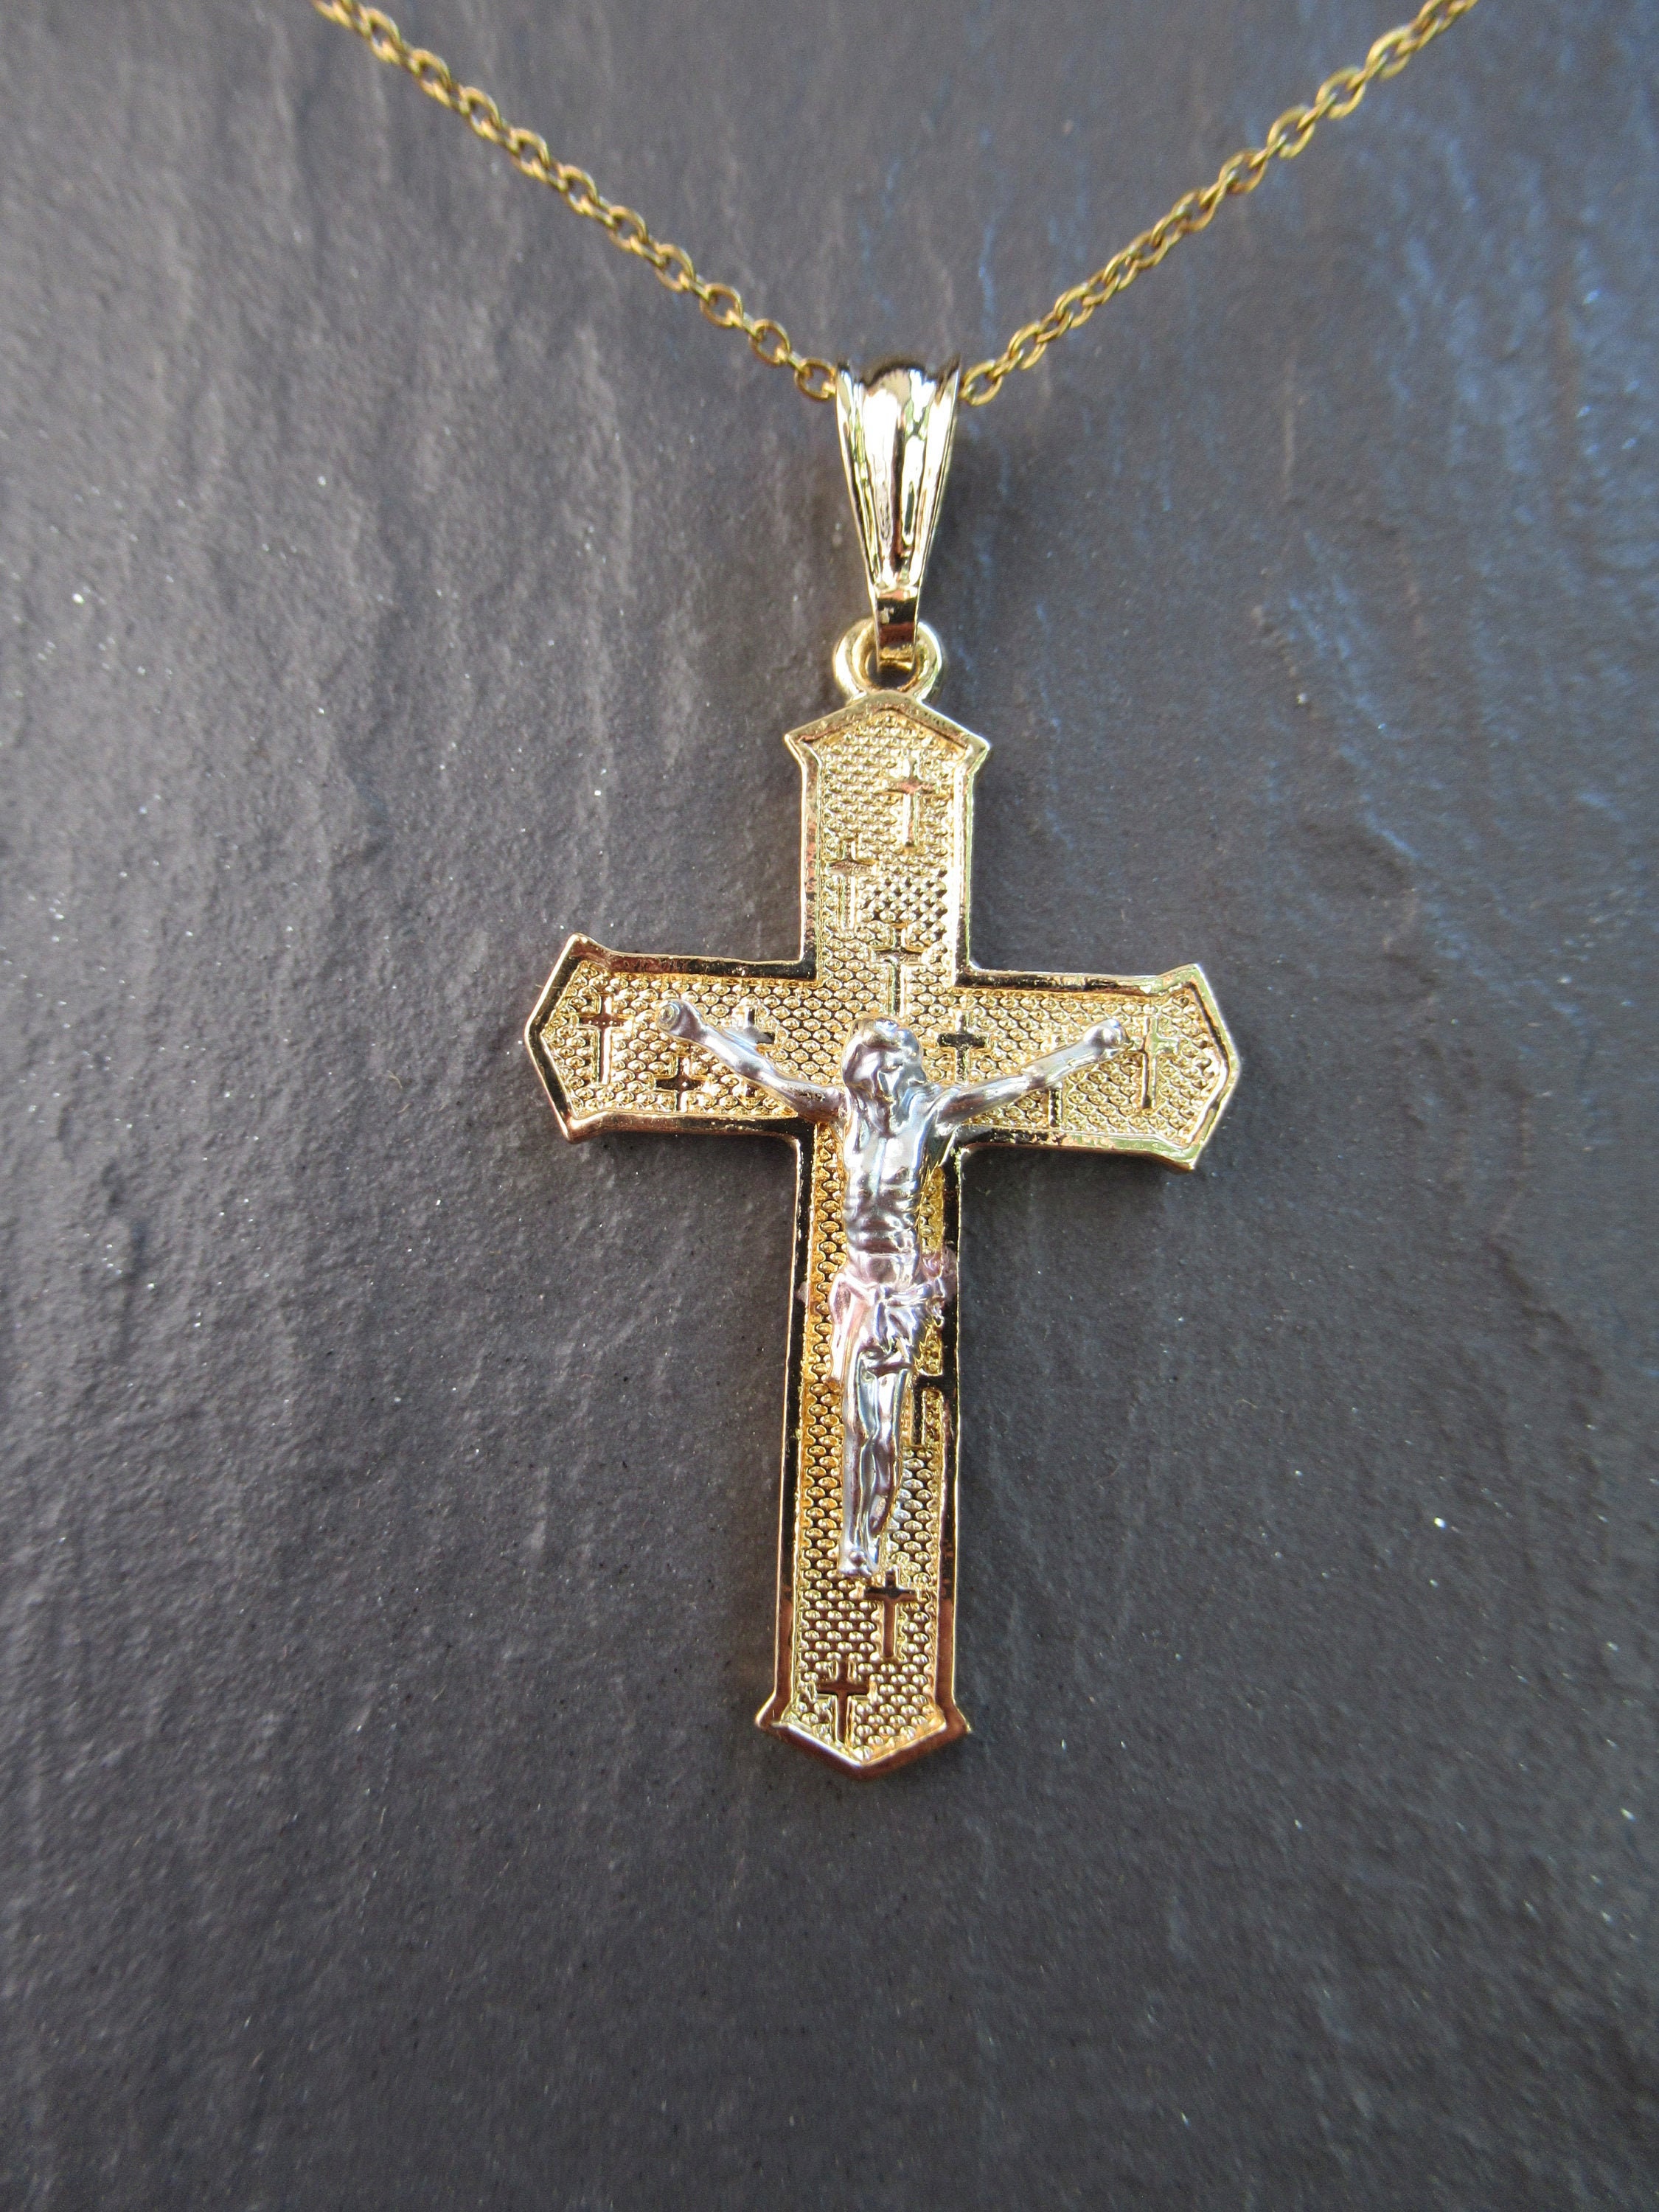 3D 18K Gold Plate Crucifix Chain Necklace Christian Jesus - Etsy UK